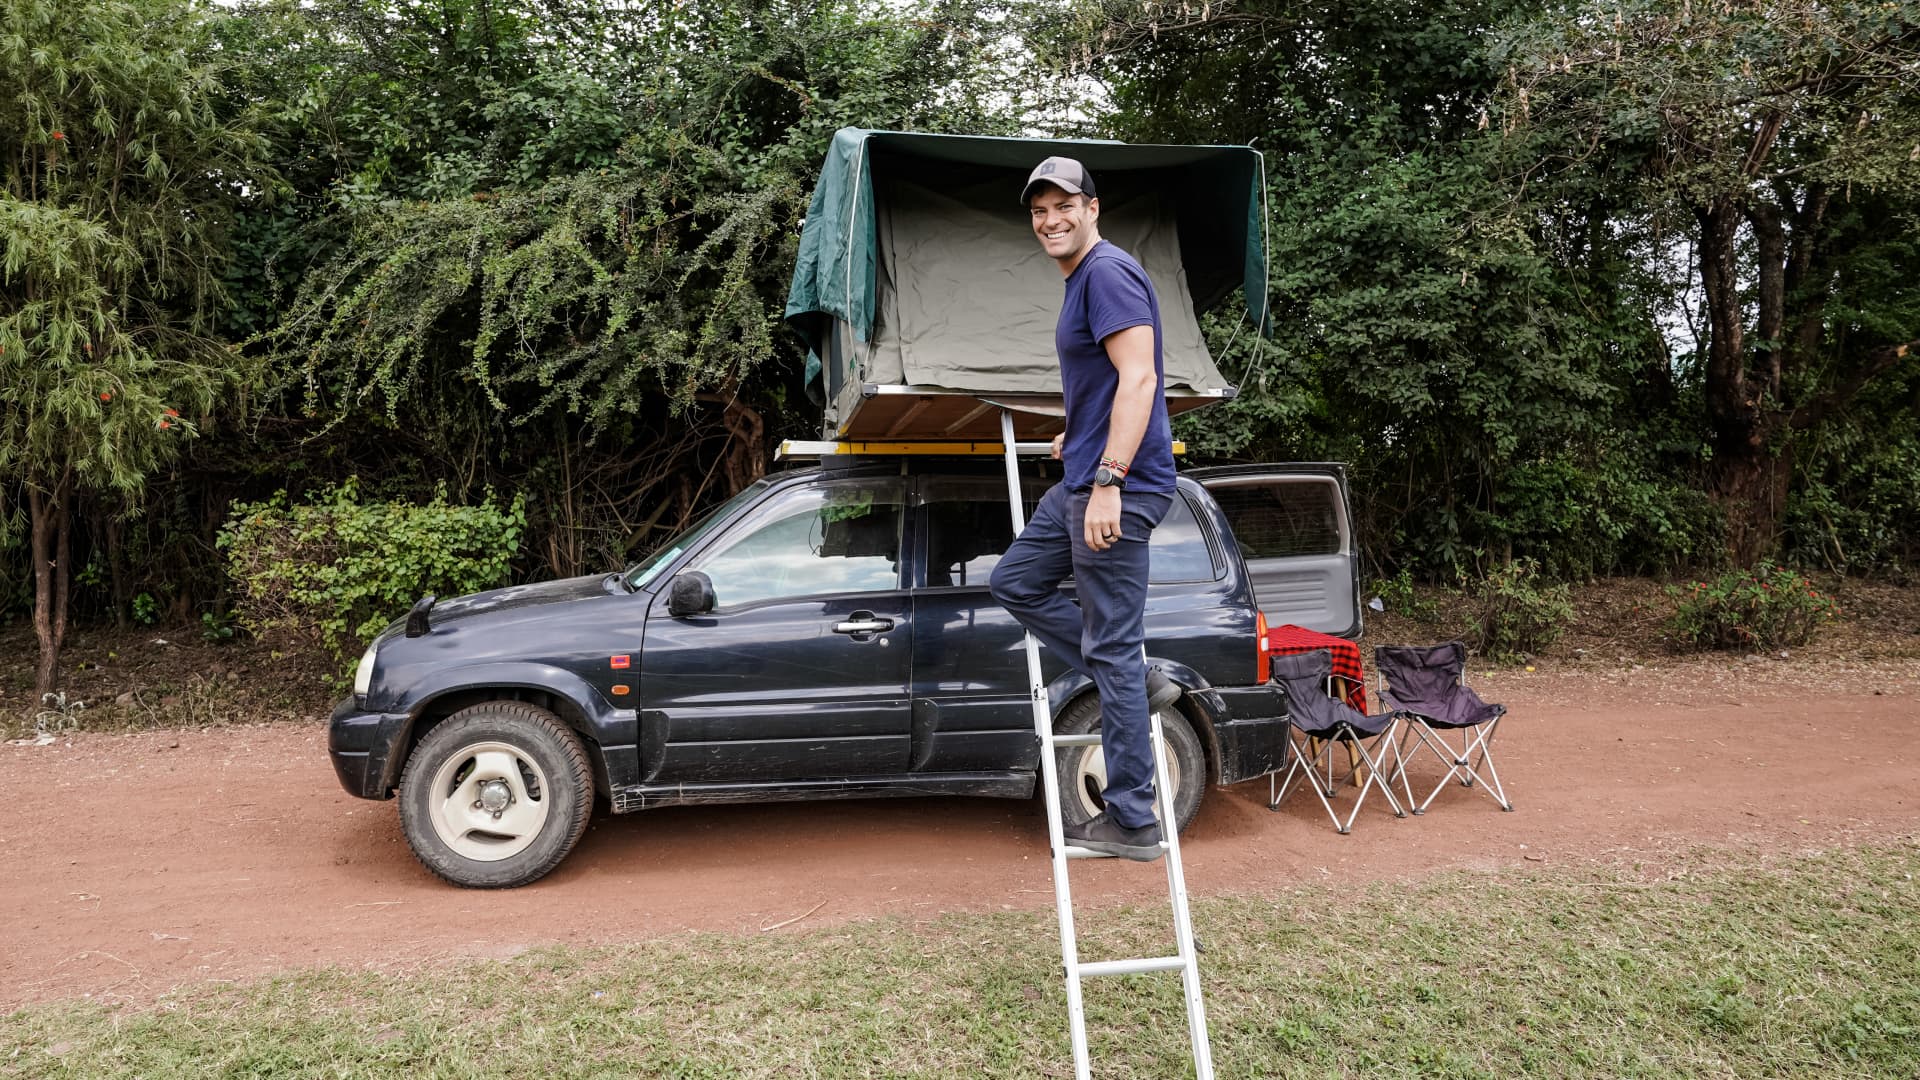 Hudson and Emily Crider camping during their self-drive safari in the Serengeti in Tanzania.